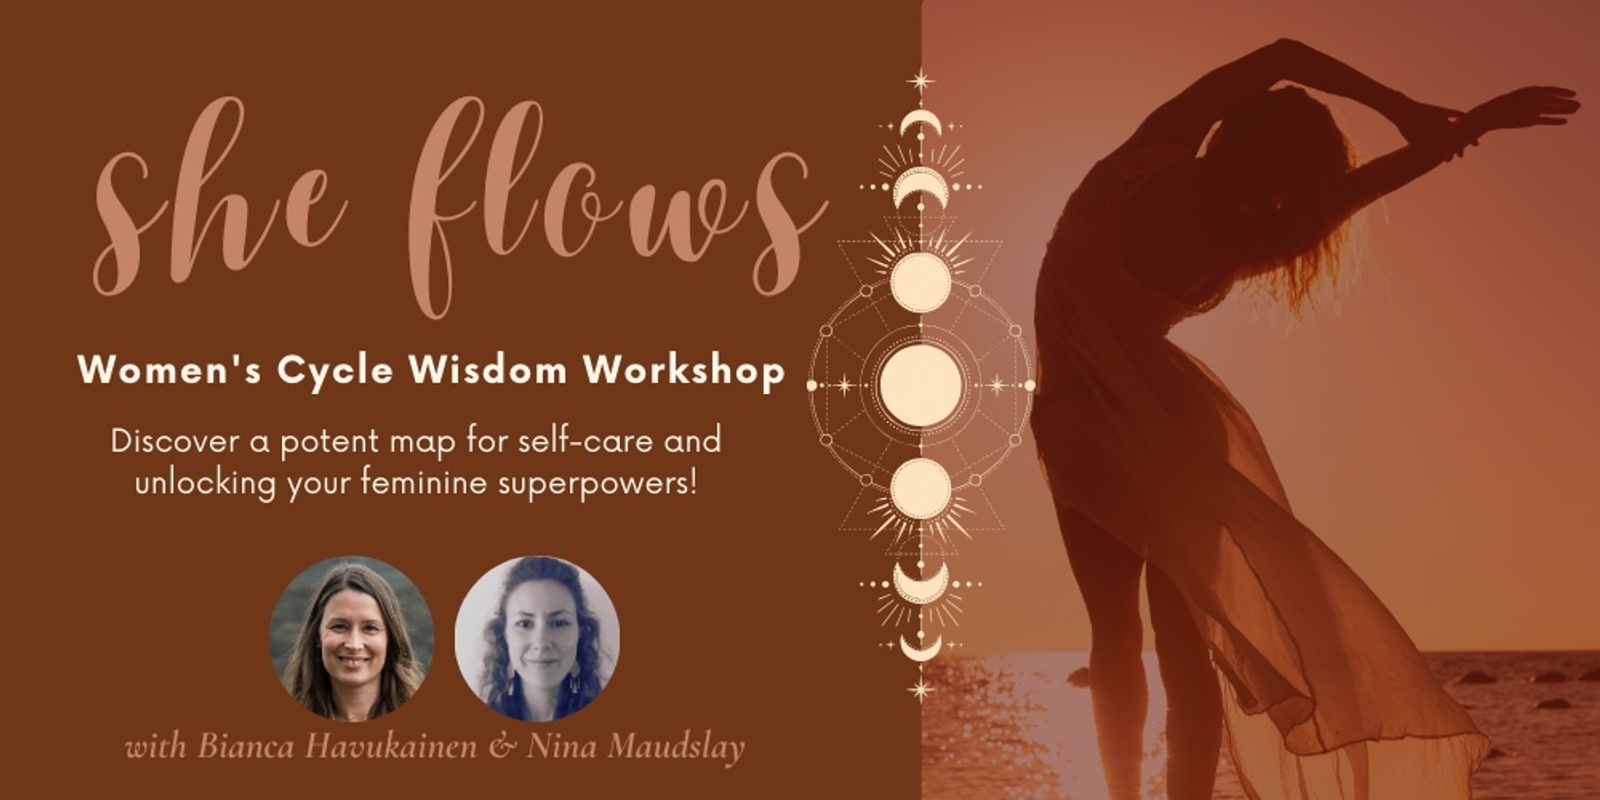 She Flows - Women's Circle & Cycle Wisdom Workshop